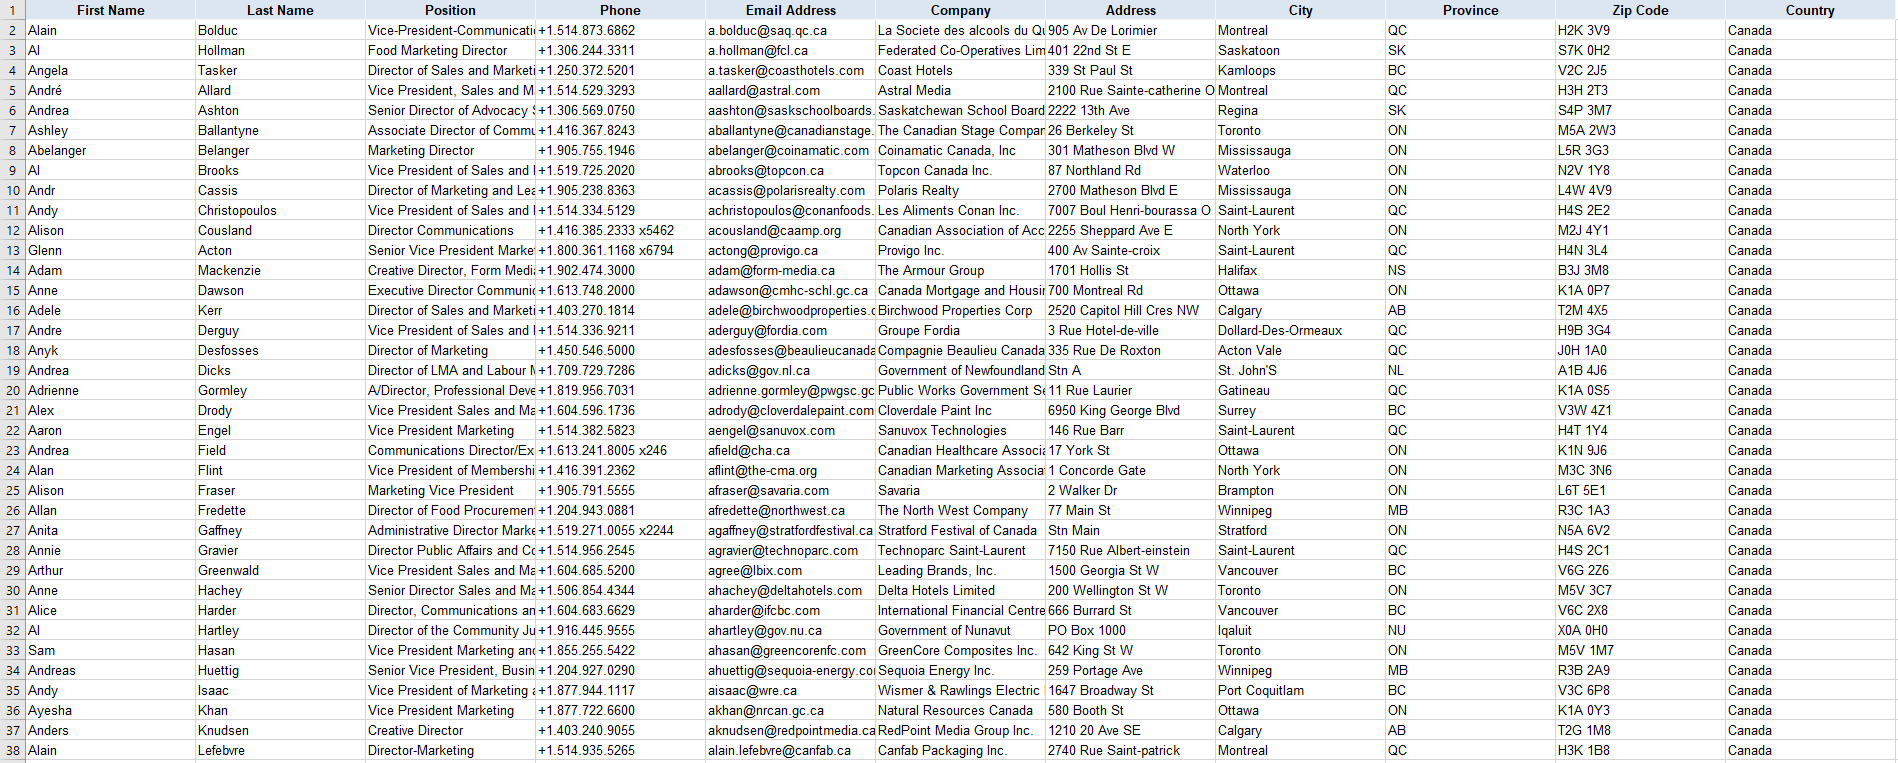 Canada Email Database Data Sample